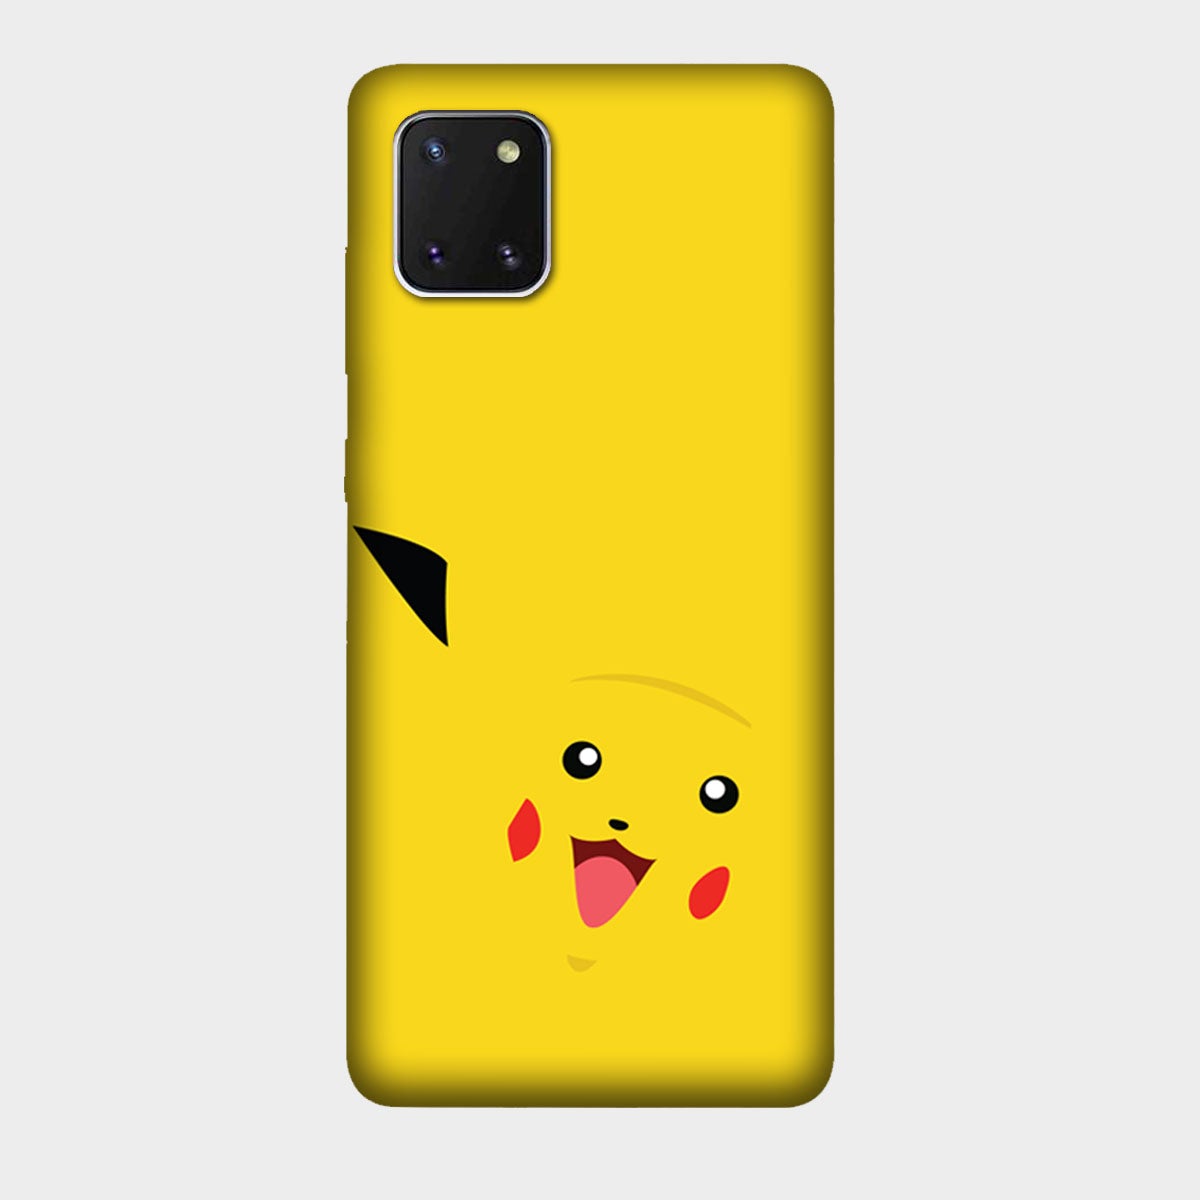 Pikachu - Pokemon - Yellow - Mobile Phone Cover - Hard Case - Samsung - Samsung